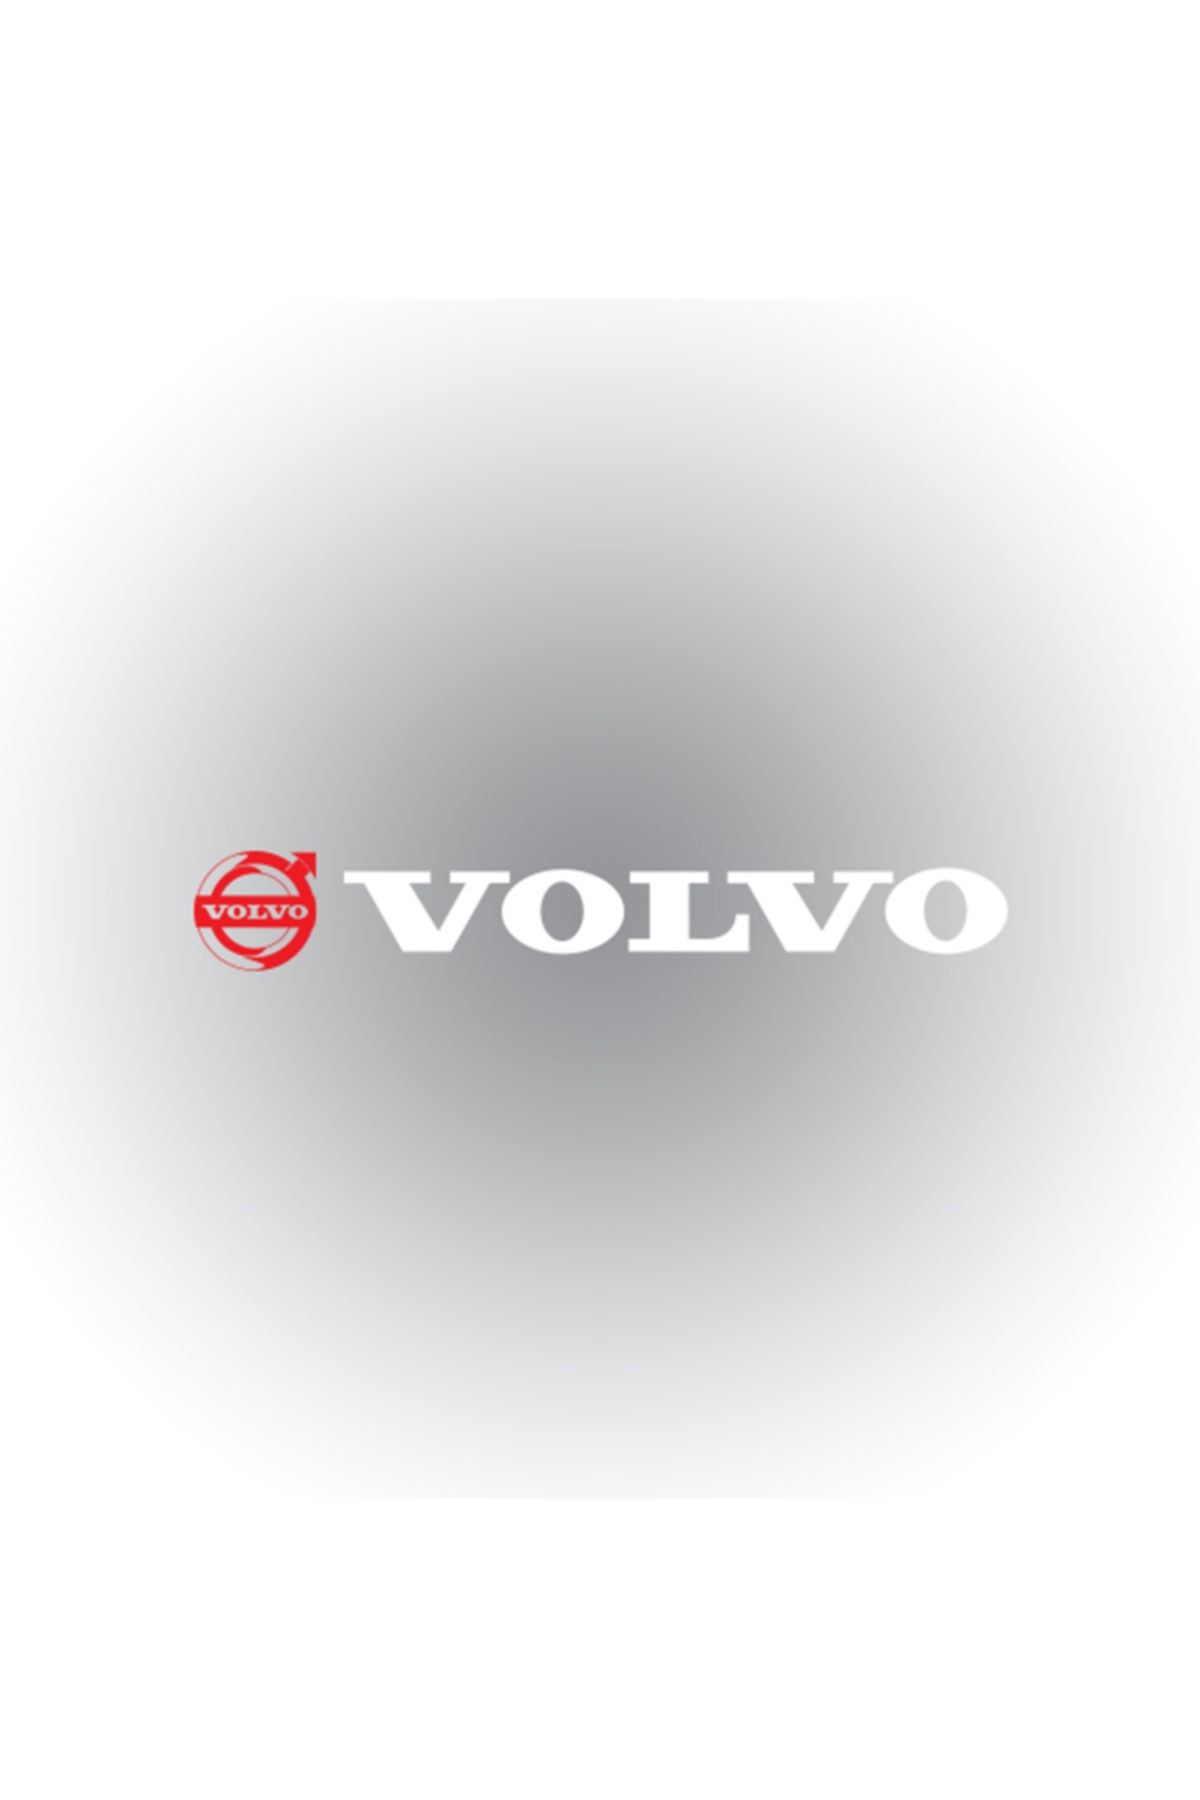 Otografik Volvo Ön Cam Oto Sticker  60 cm X 9 cm